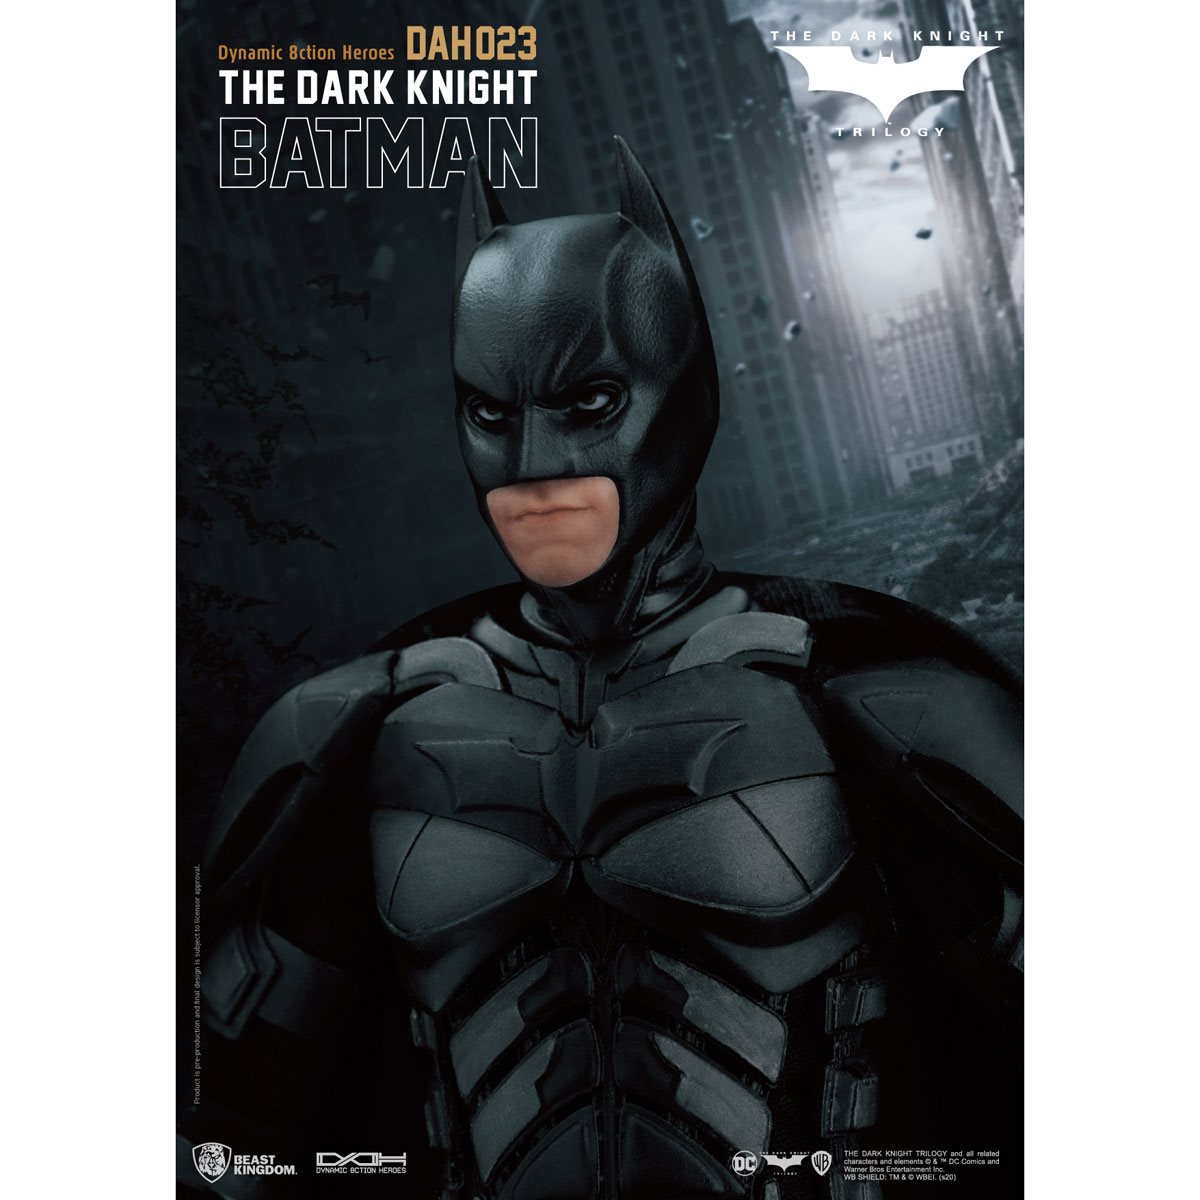 HOT新作BEAST KINGDOM DAH-023 バットマン ダークナイト 1/9 フィギュア / DYNAMIC 8CTION HEROES BATMAN DARK KNIGHT バットマン